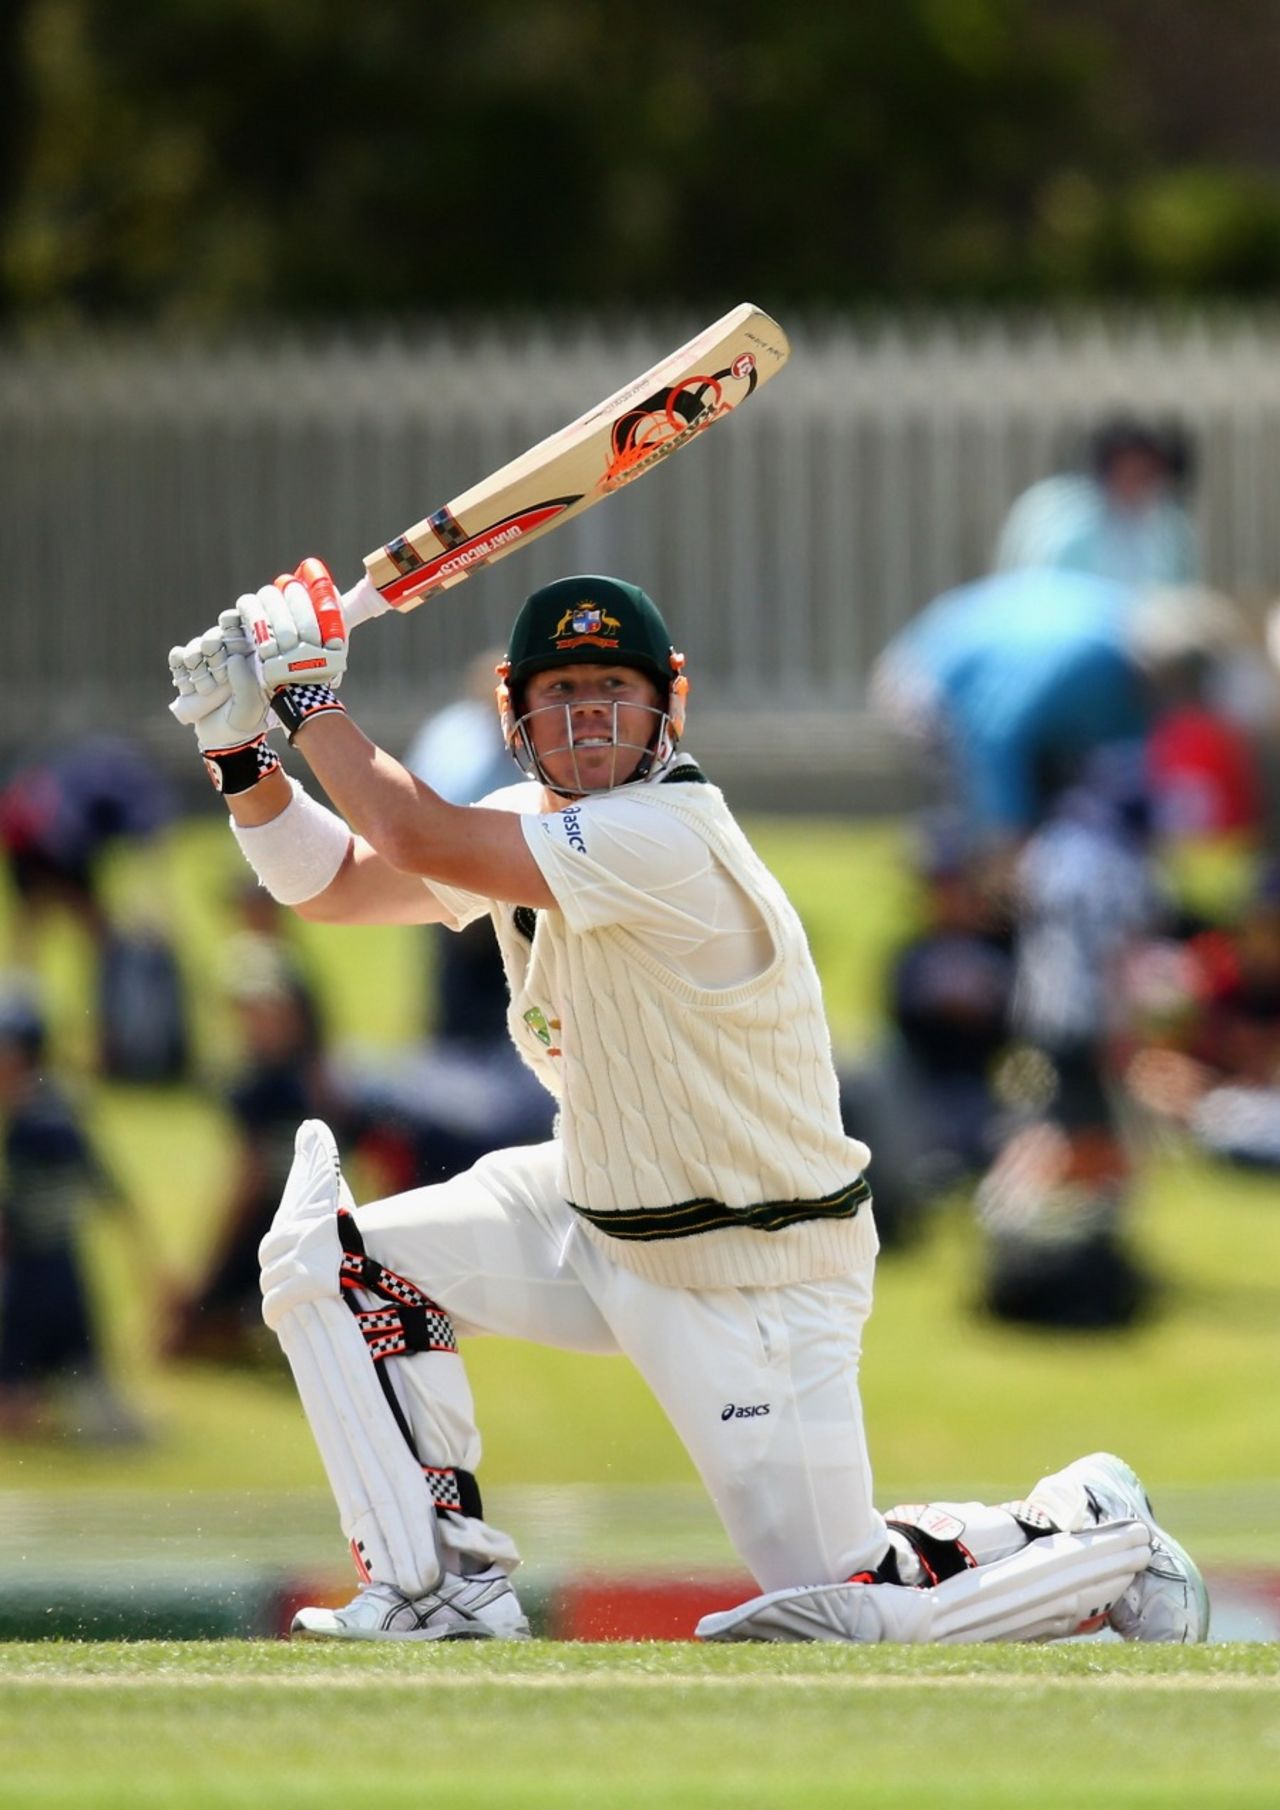 David Warner cuts over the top, Australia v Sri Lanka, 1st Test, Hobart, 4th day, December 17, 2012